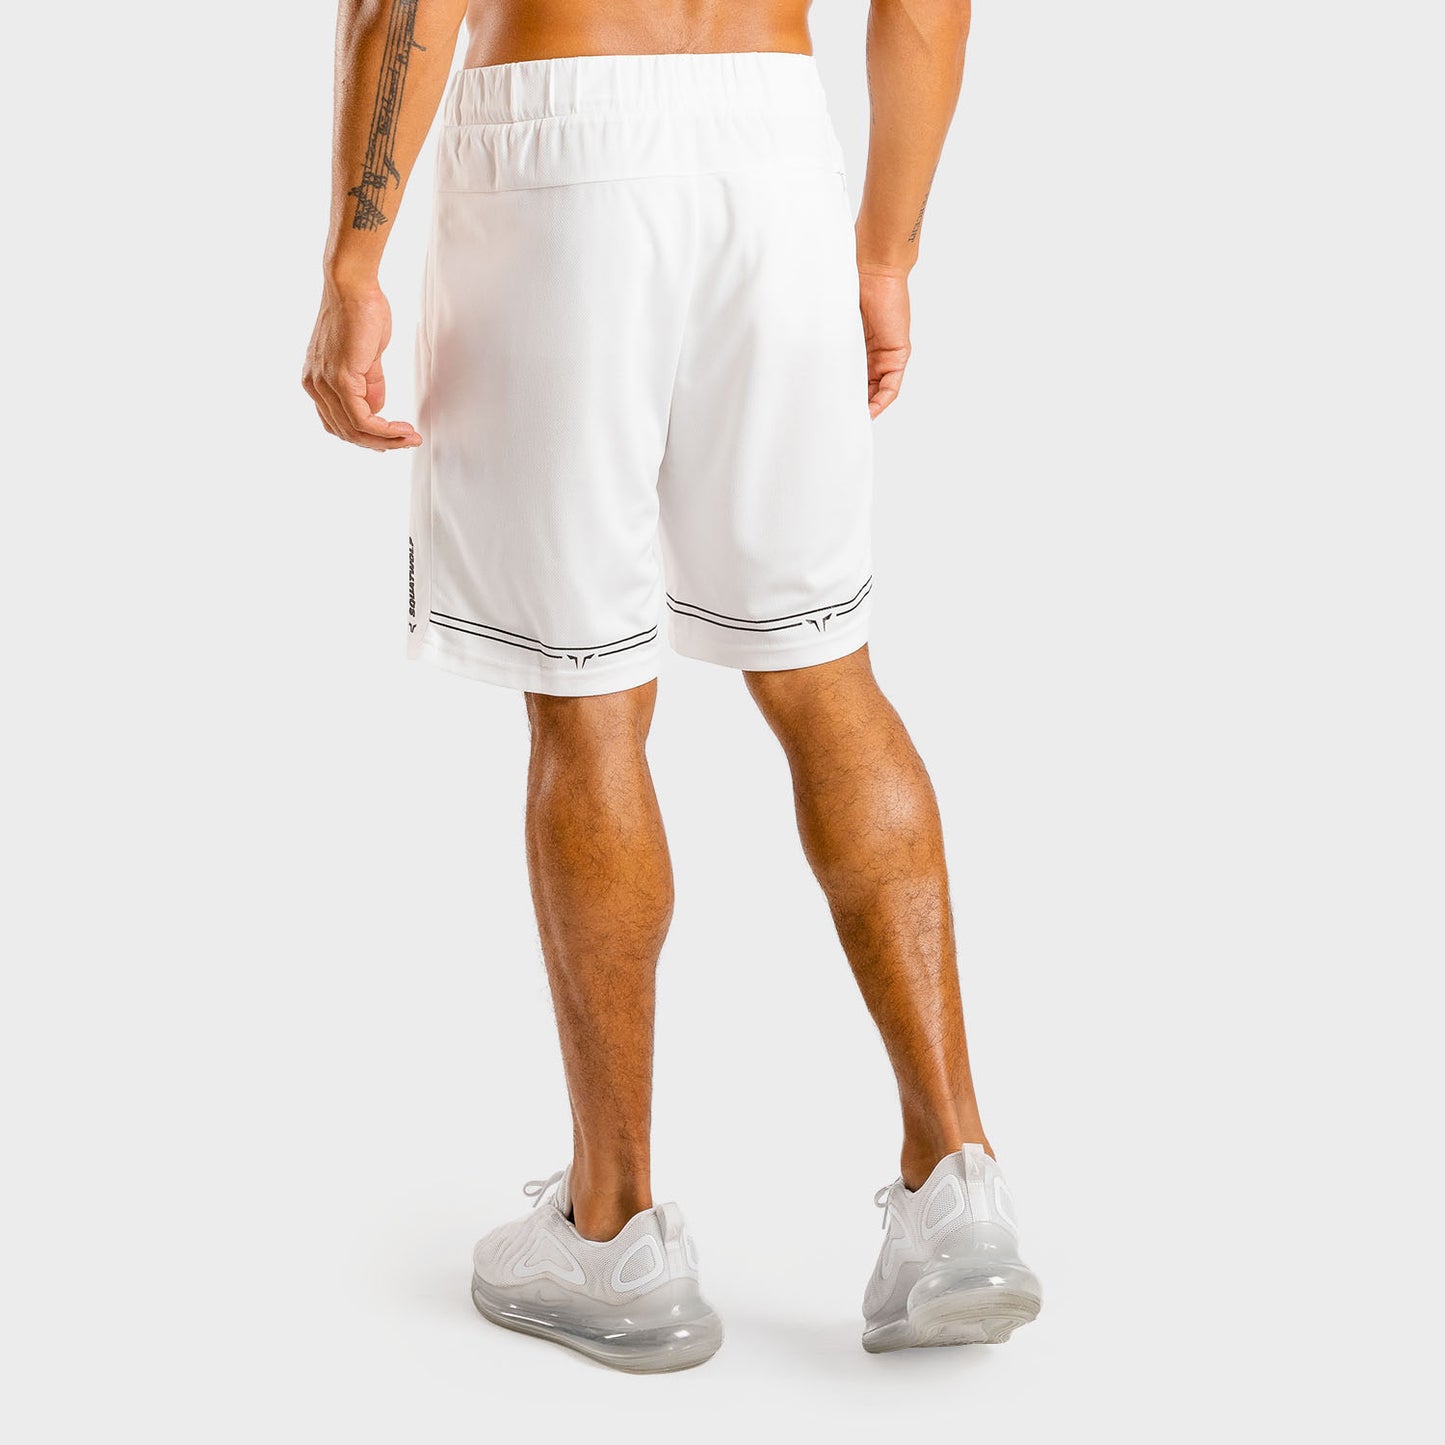 squatwolf-workout-short-for-men-flux-basketball-shorts-white-gym-wear